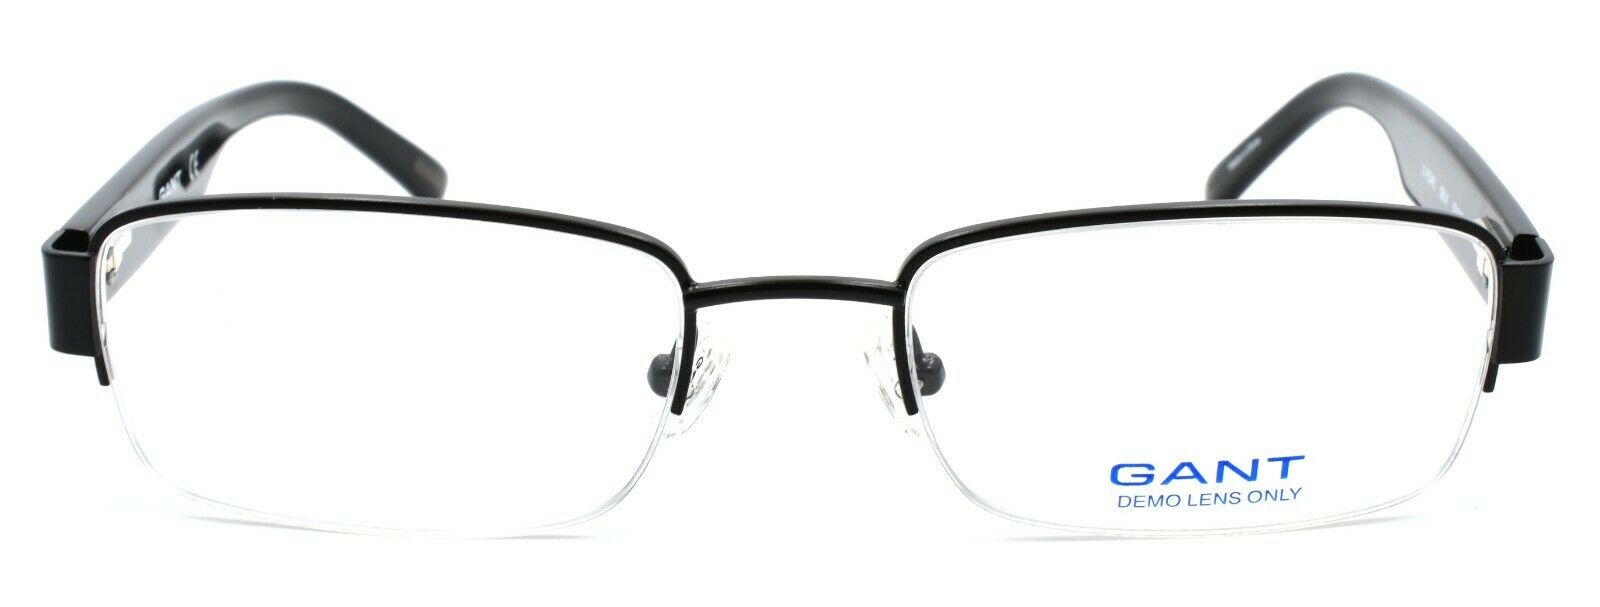 2-GANT G Pearl SBLK Men's Eyeglasses Frames Half-rim 53-19-140 Satin Black-715583173613-IKSpecs